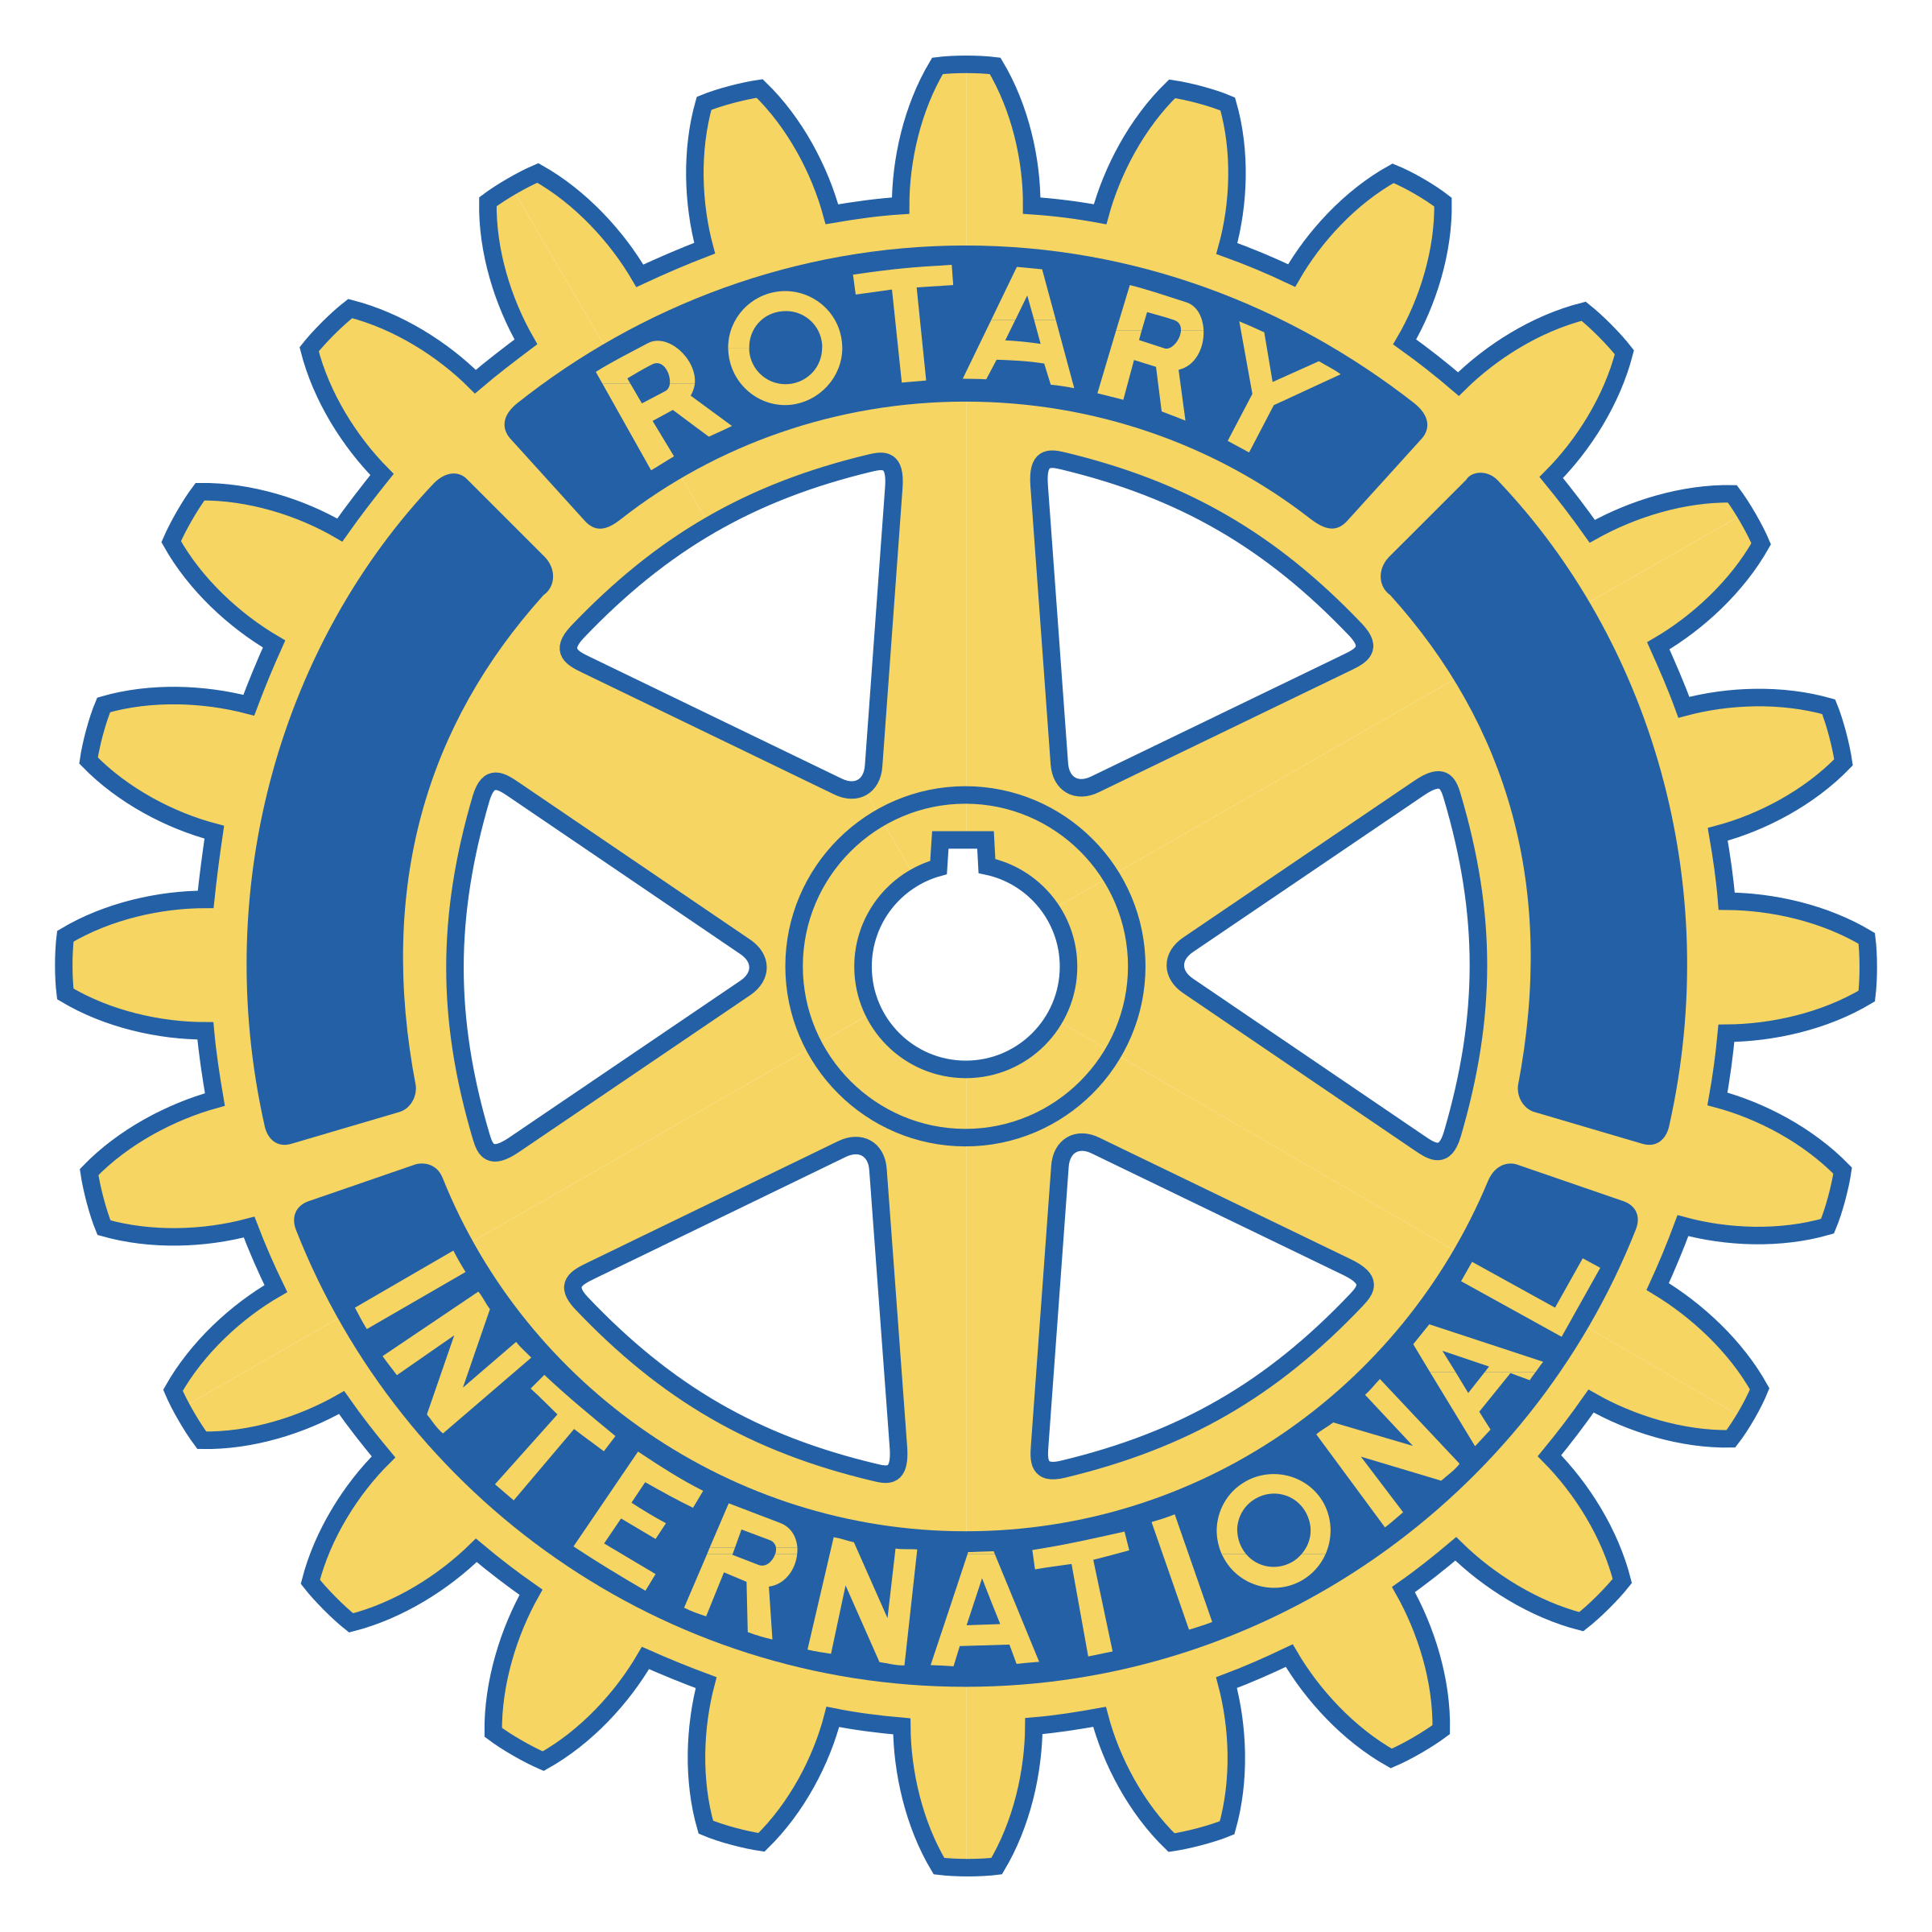 Rotary Logo - Rotary International Logo PNG Transparent & SVG Vector - Freebie Supply